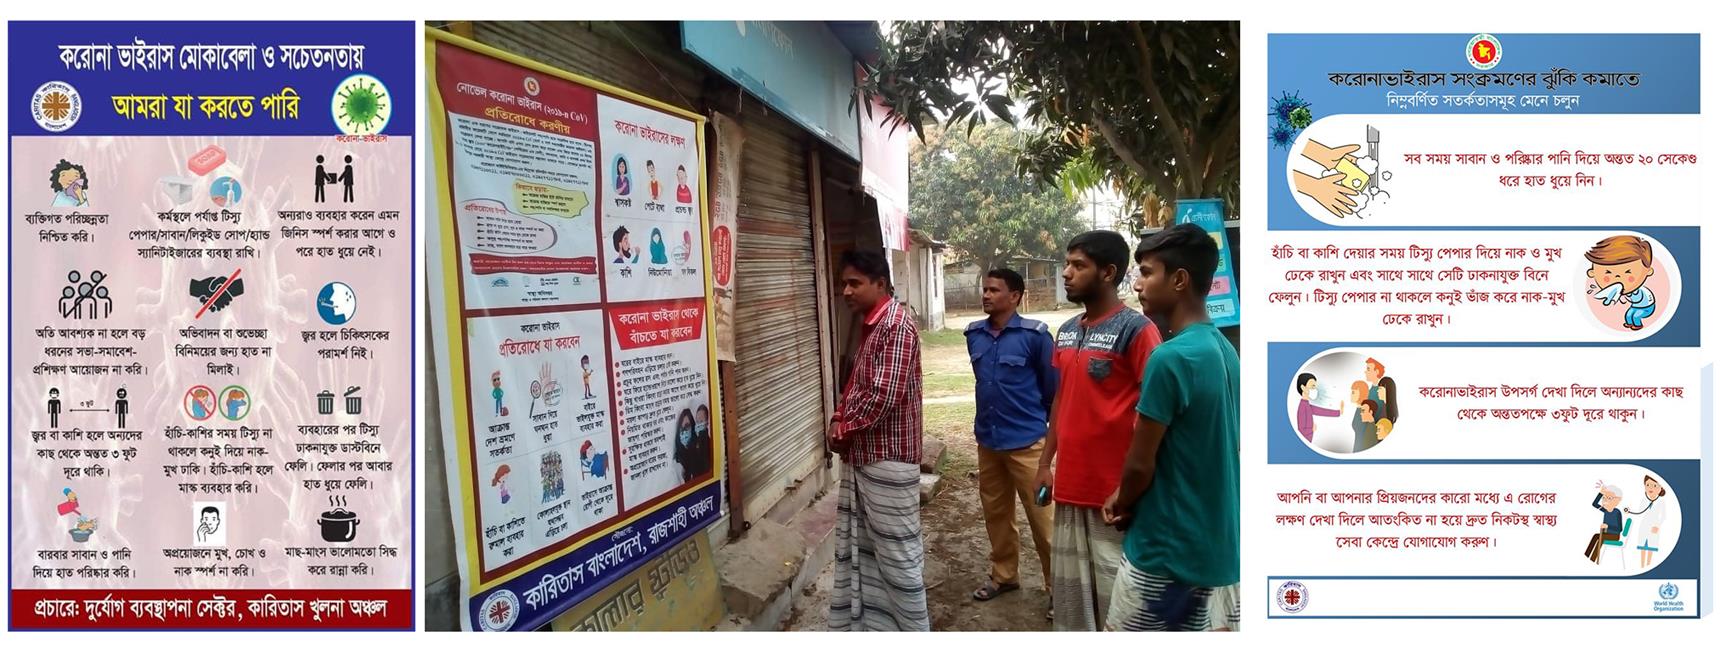 Bangladesch: Hygiene-Aufklärung mit Plakaten